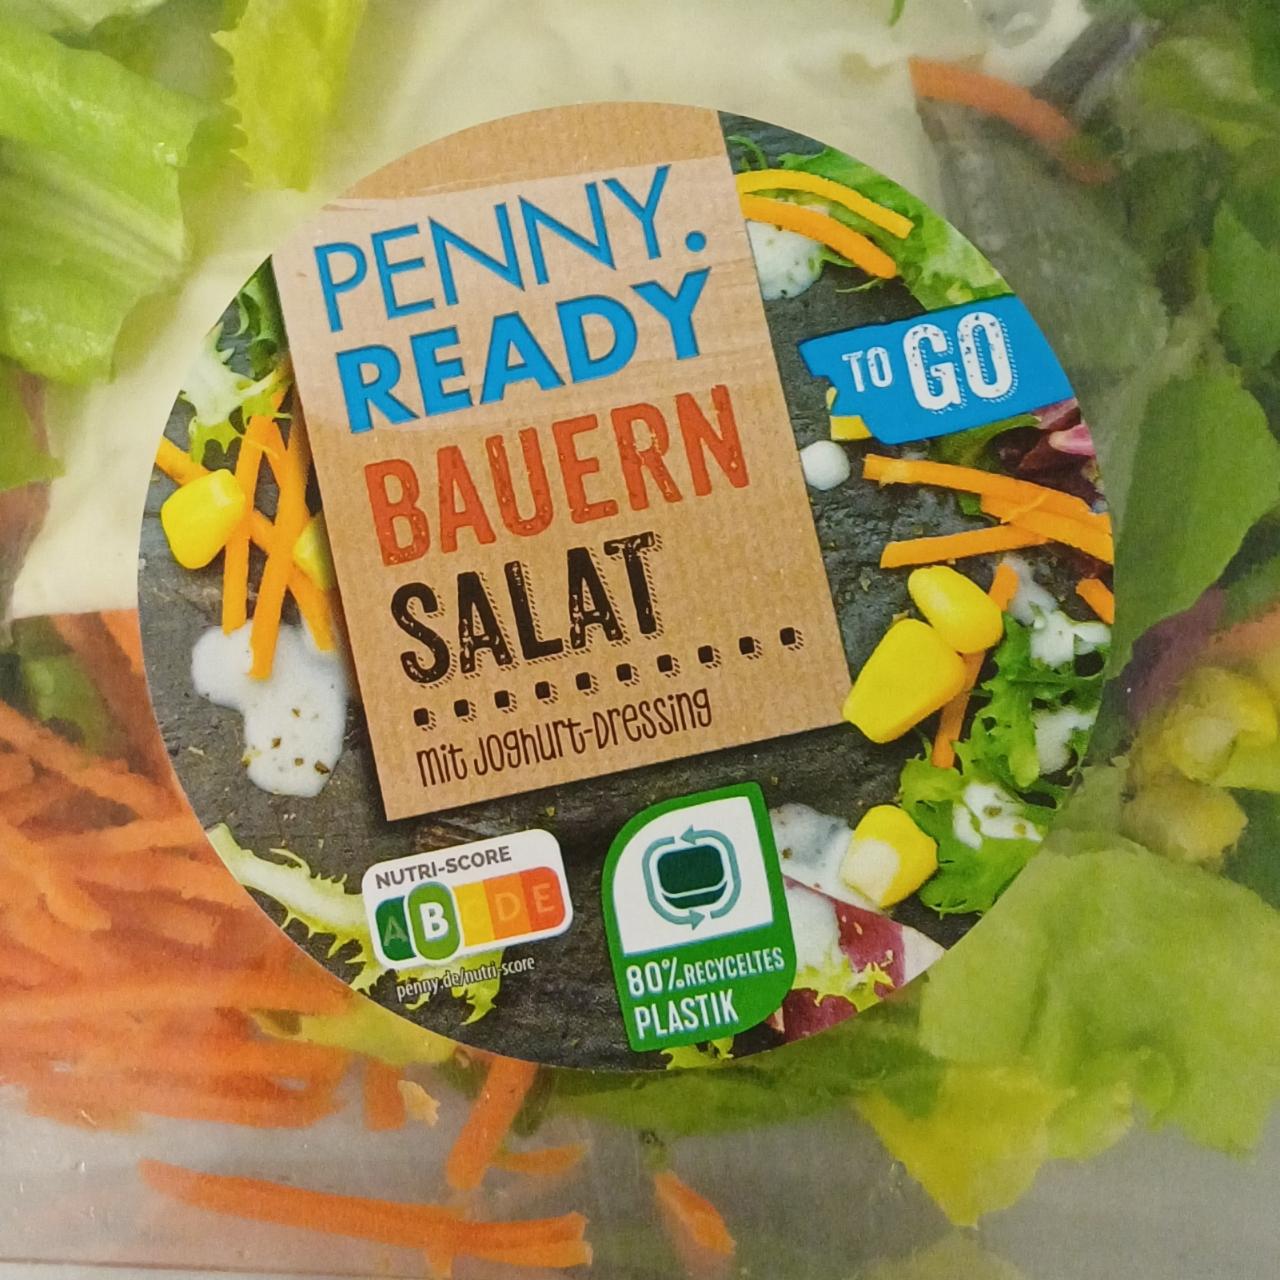 Fotografie - Bauern salat mít joghurt dressing Penny ready